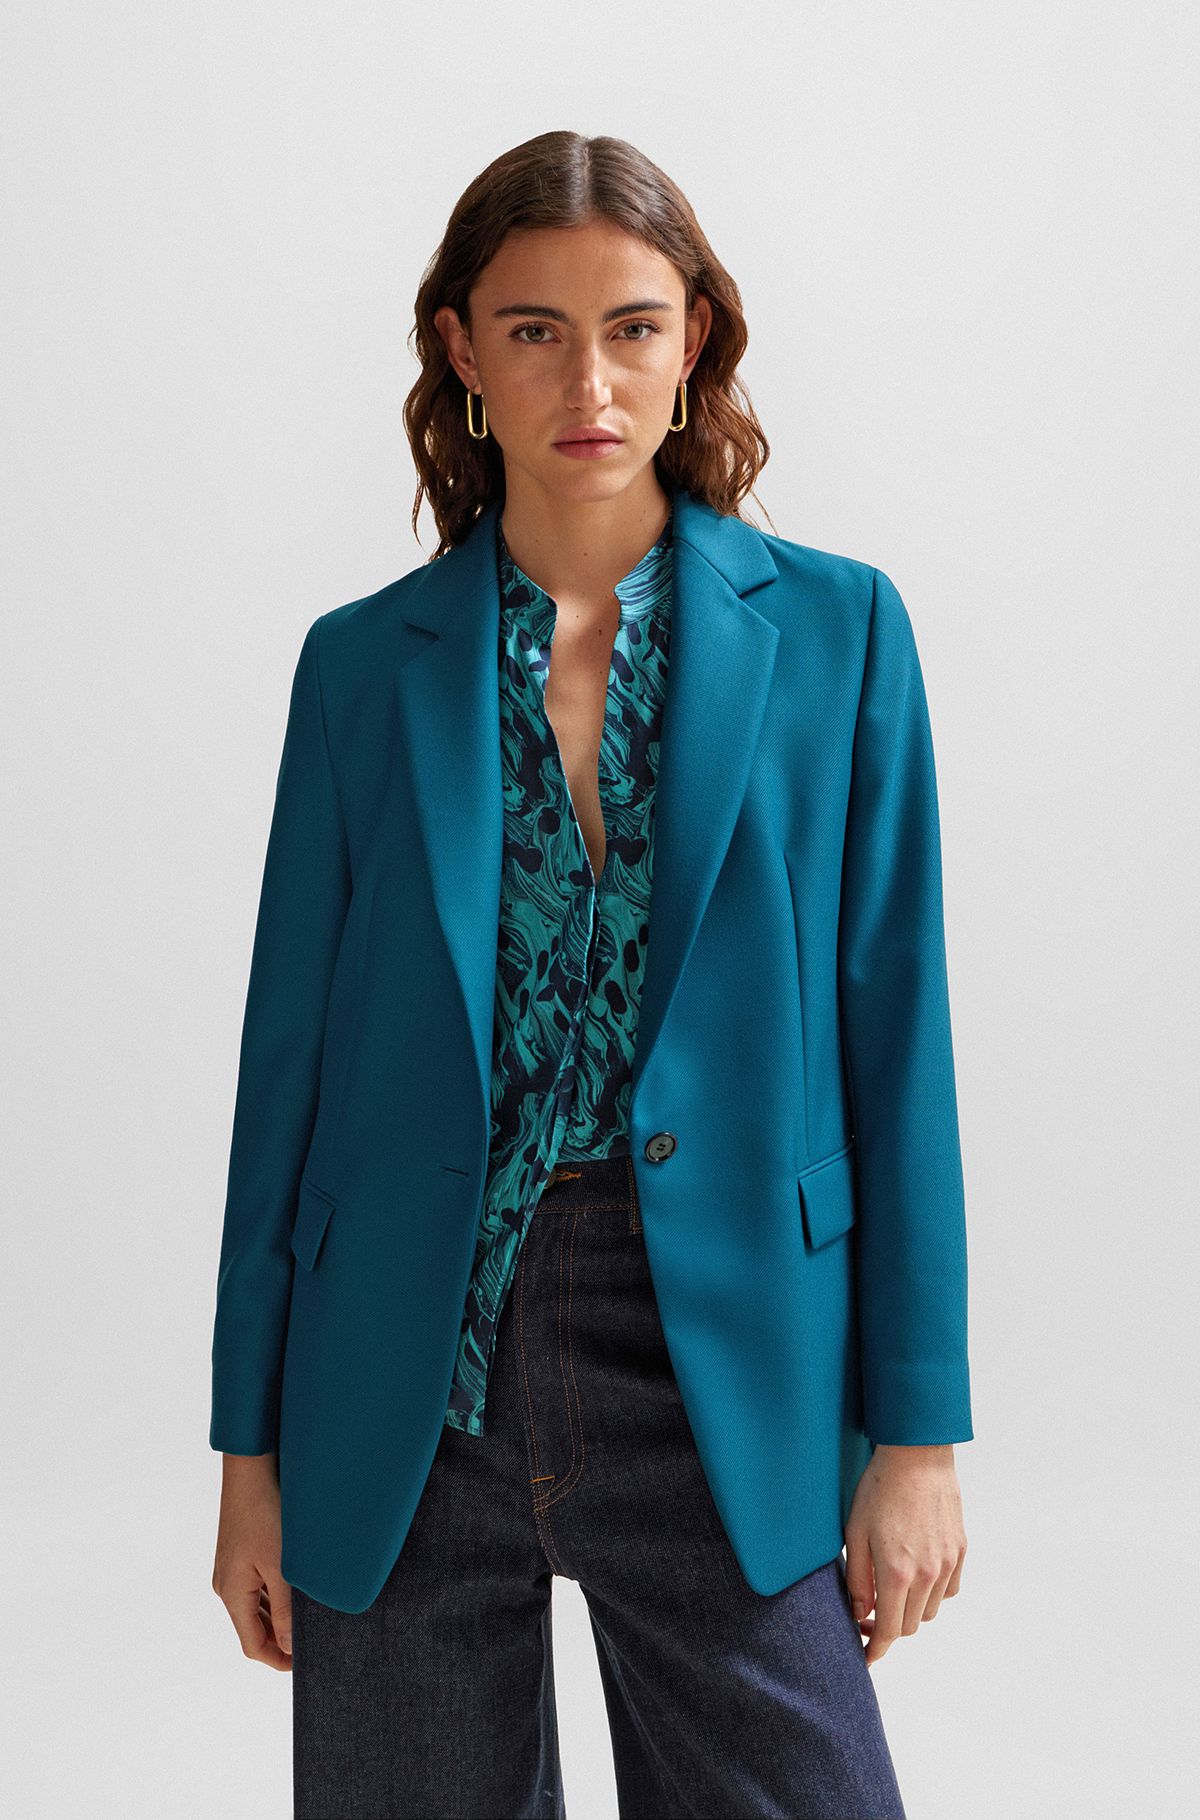 blazer jacket: Women's Workwear, Suits & Office Attire